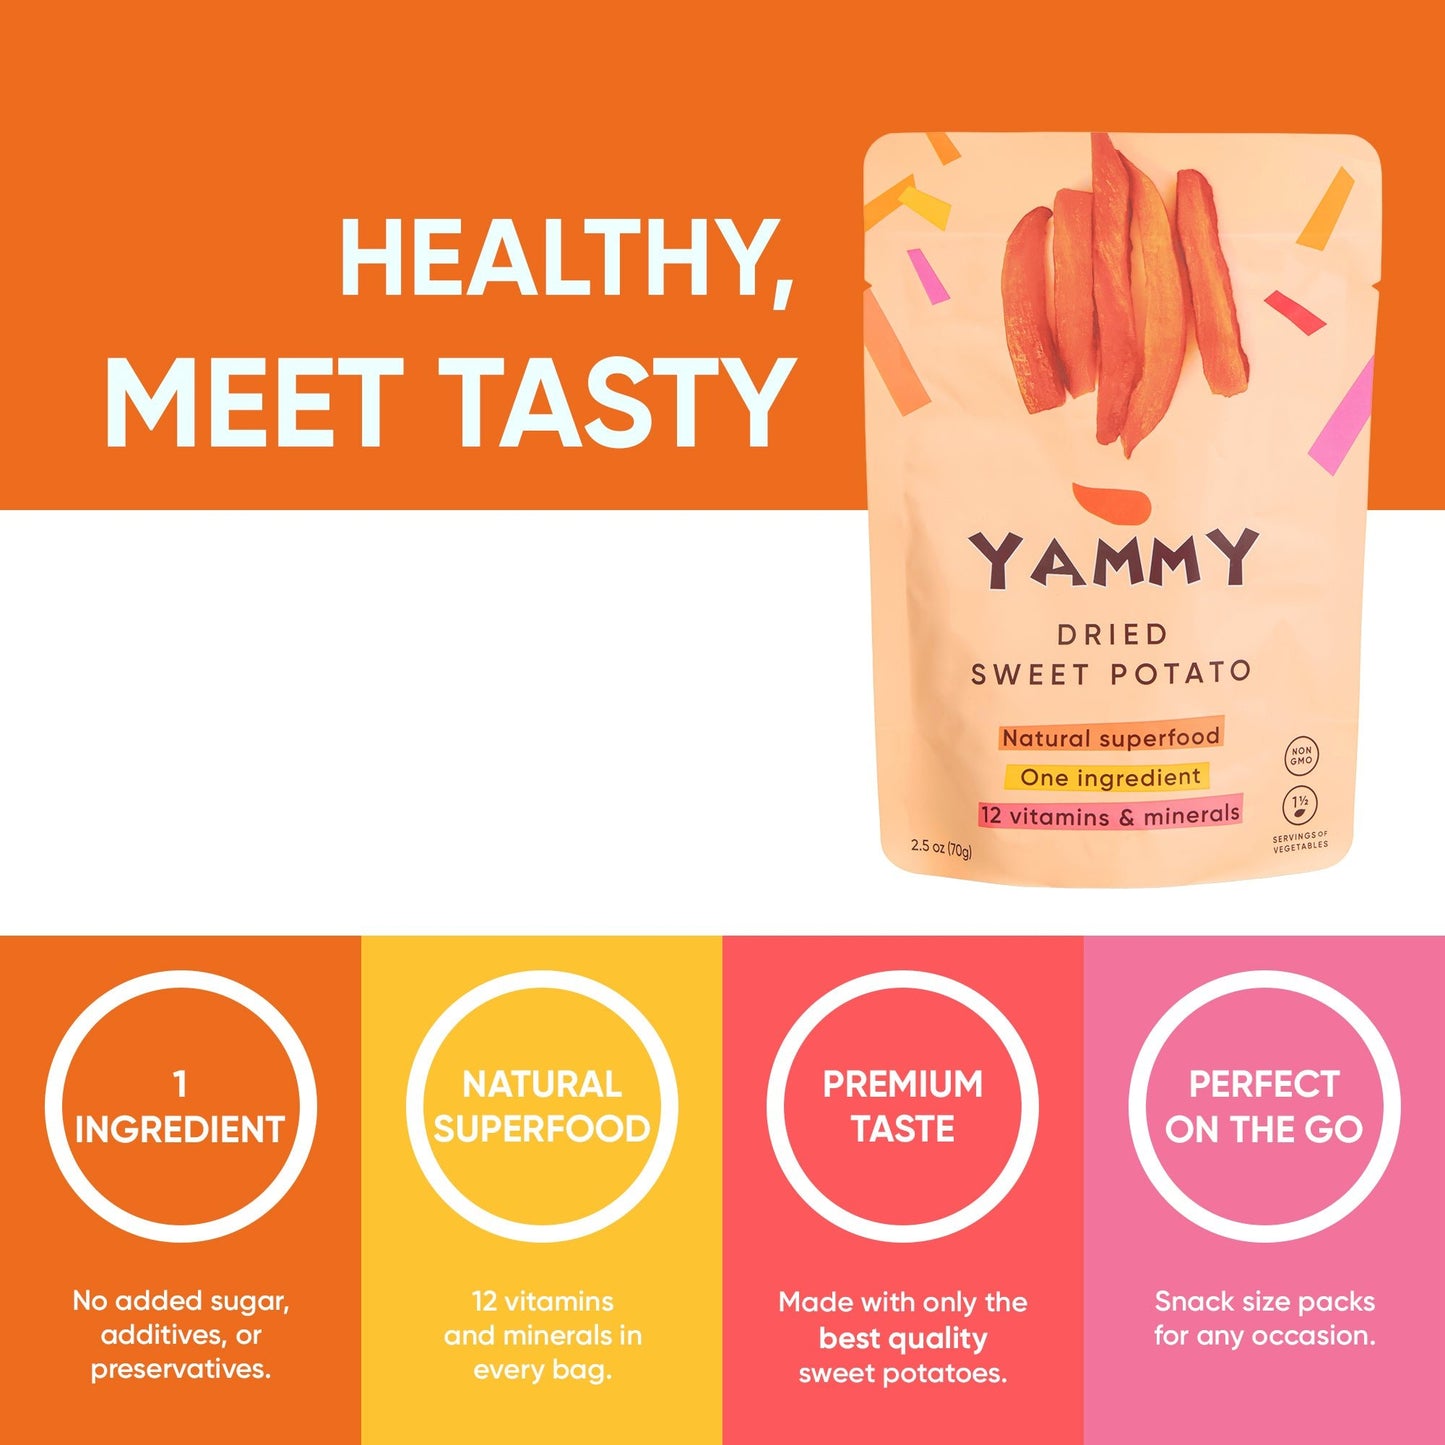 Yammy Dried Sweet Potato - Yammy by Jive Snacks